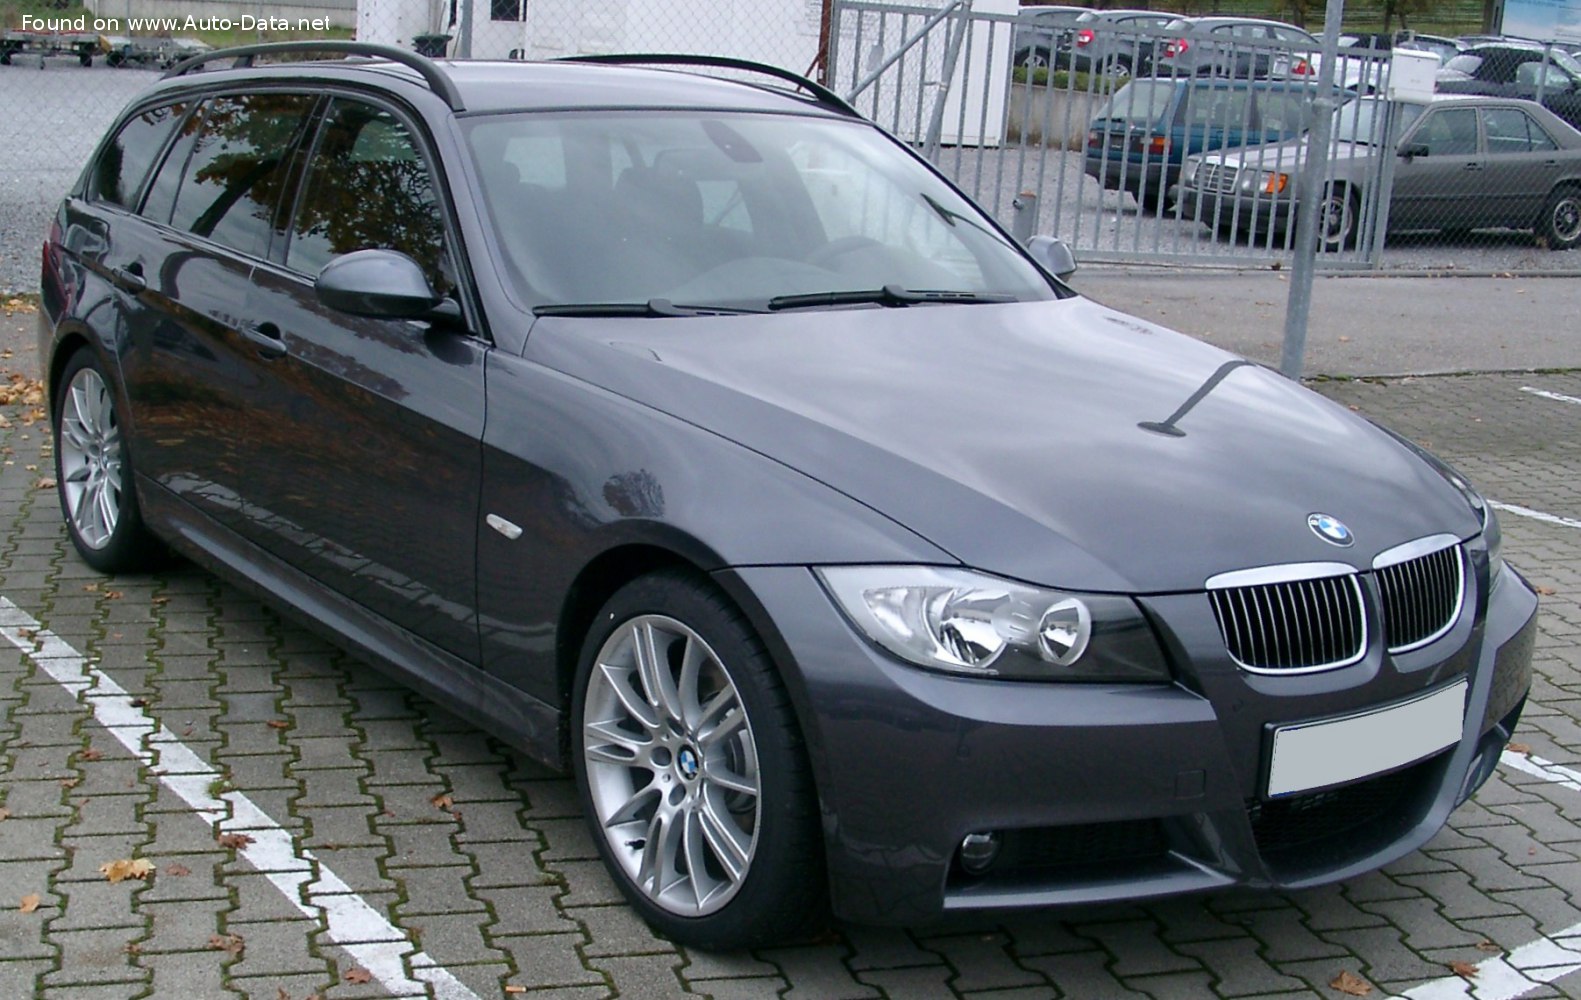 https://www.auto-data.net/images/f32/BMW-3-Series-Touring-E91.jpg